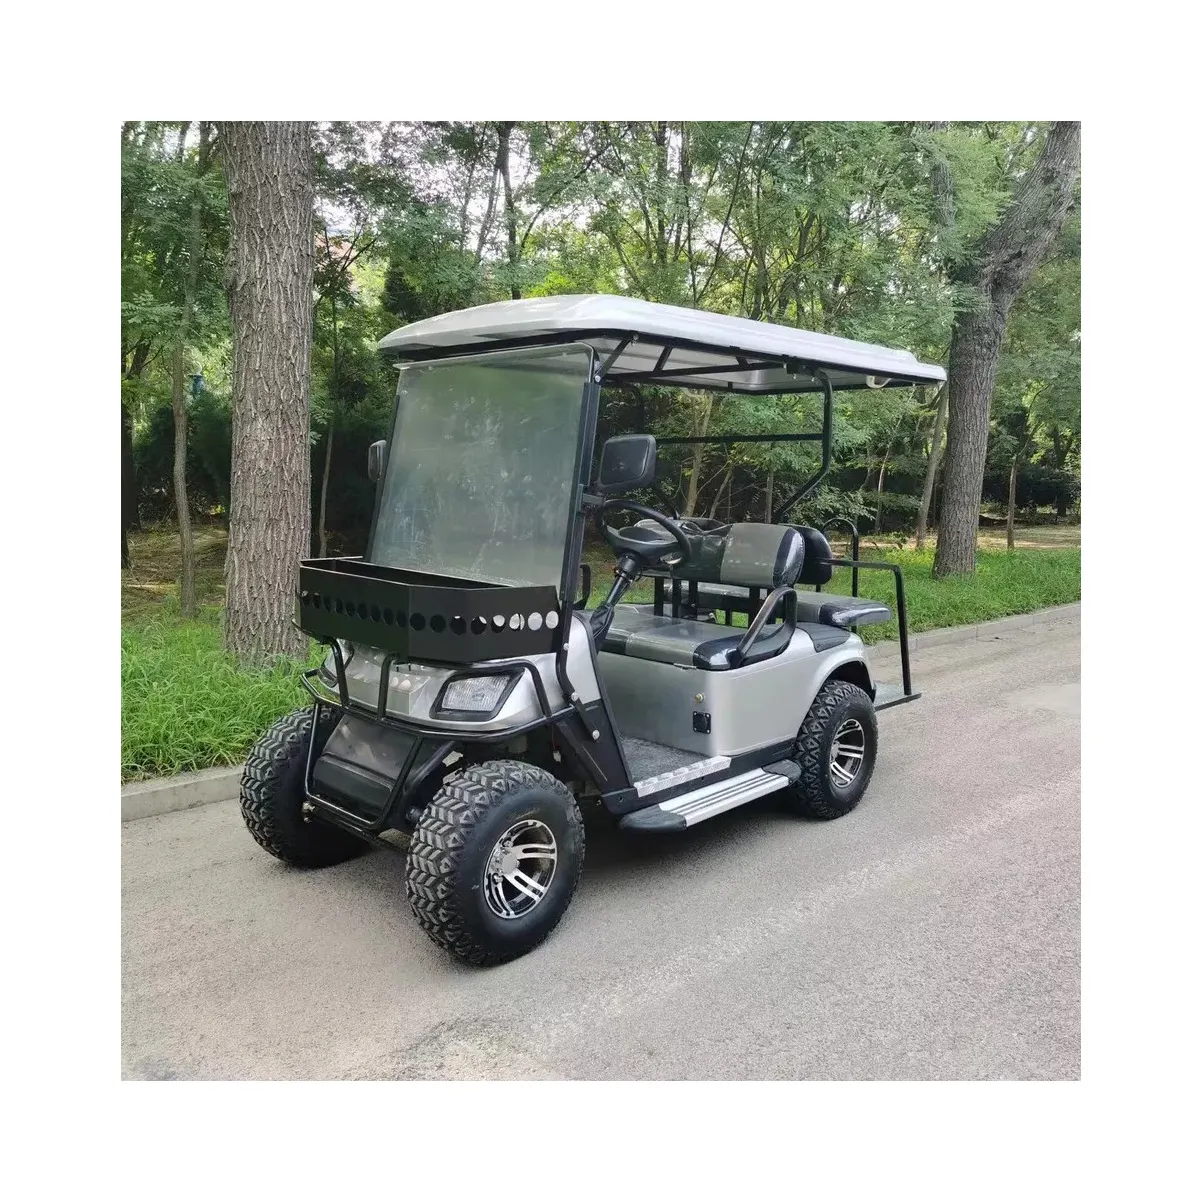 Carrito de golf eléctrico de 2 asientos, 4 asientos, 6 pasajeros, precio barato, buggy, coches de club, carros de golf eléctricos